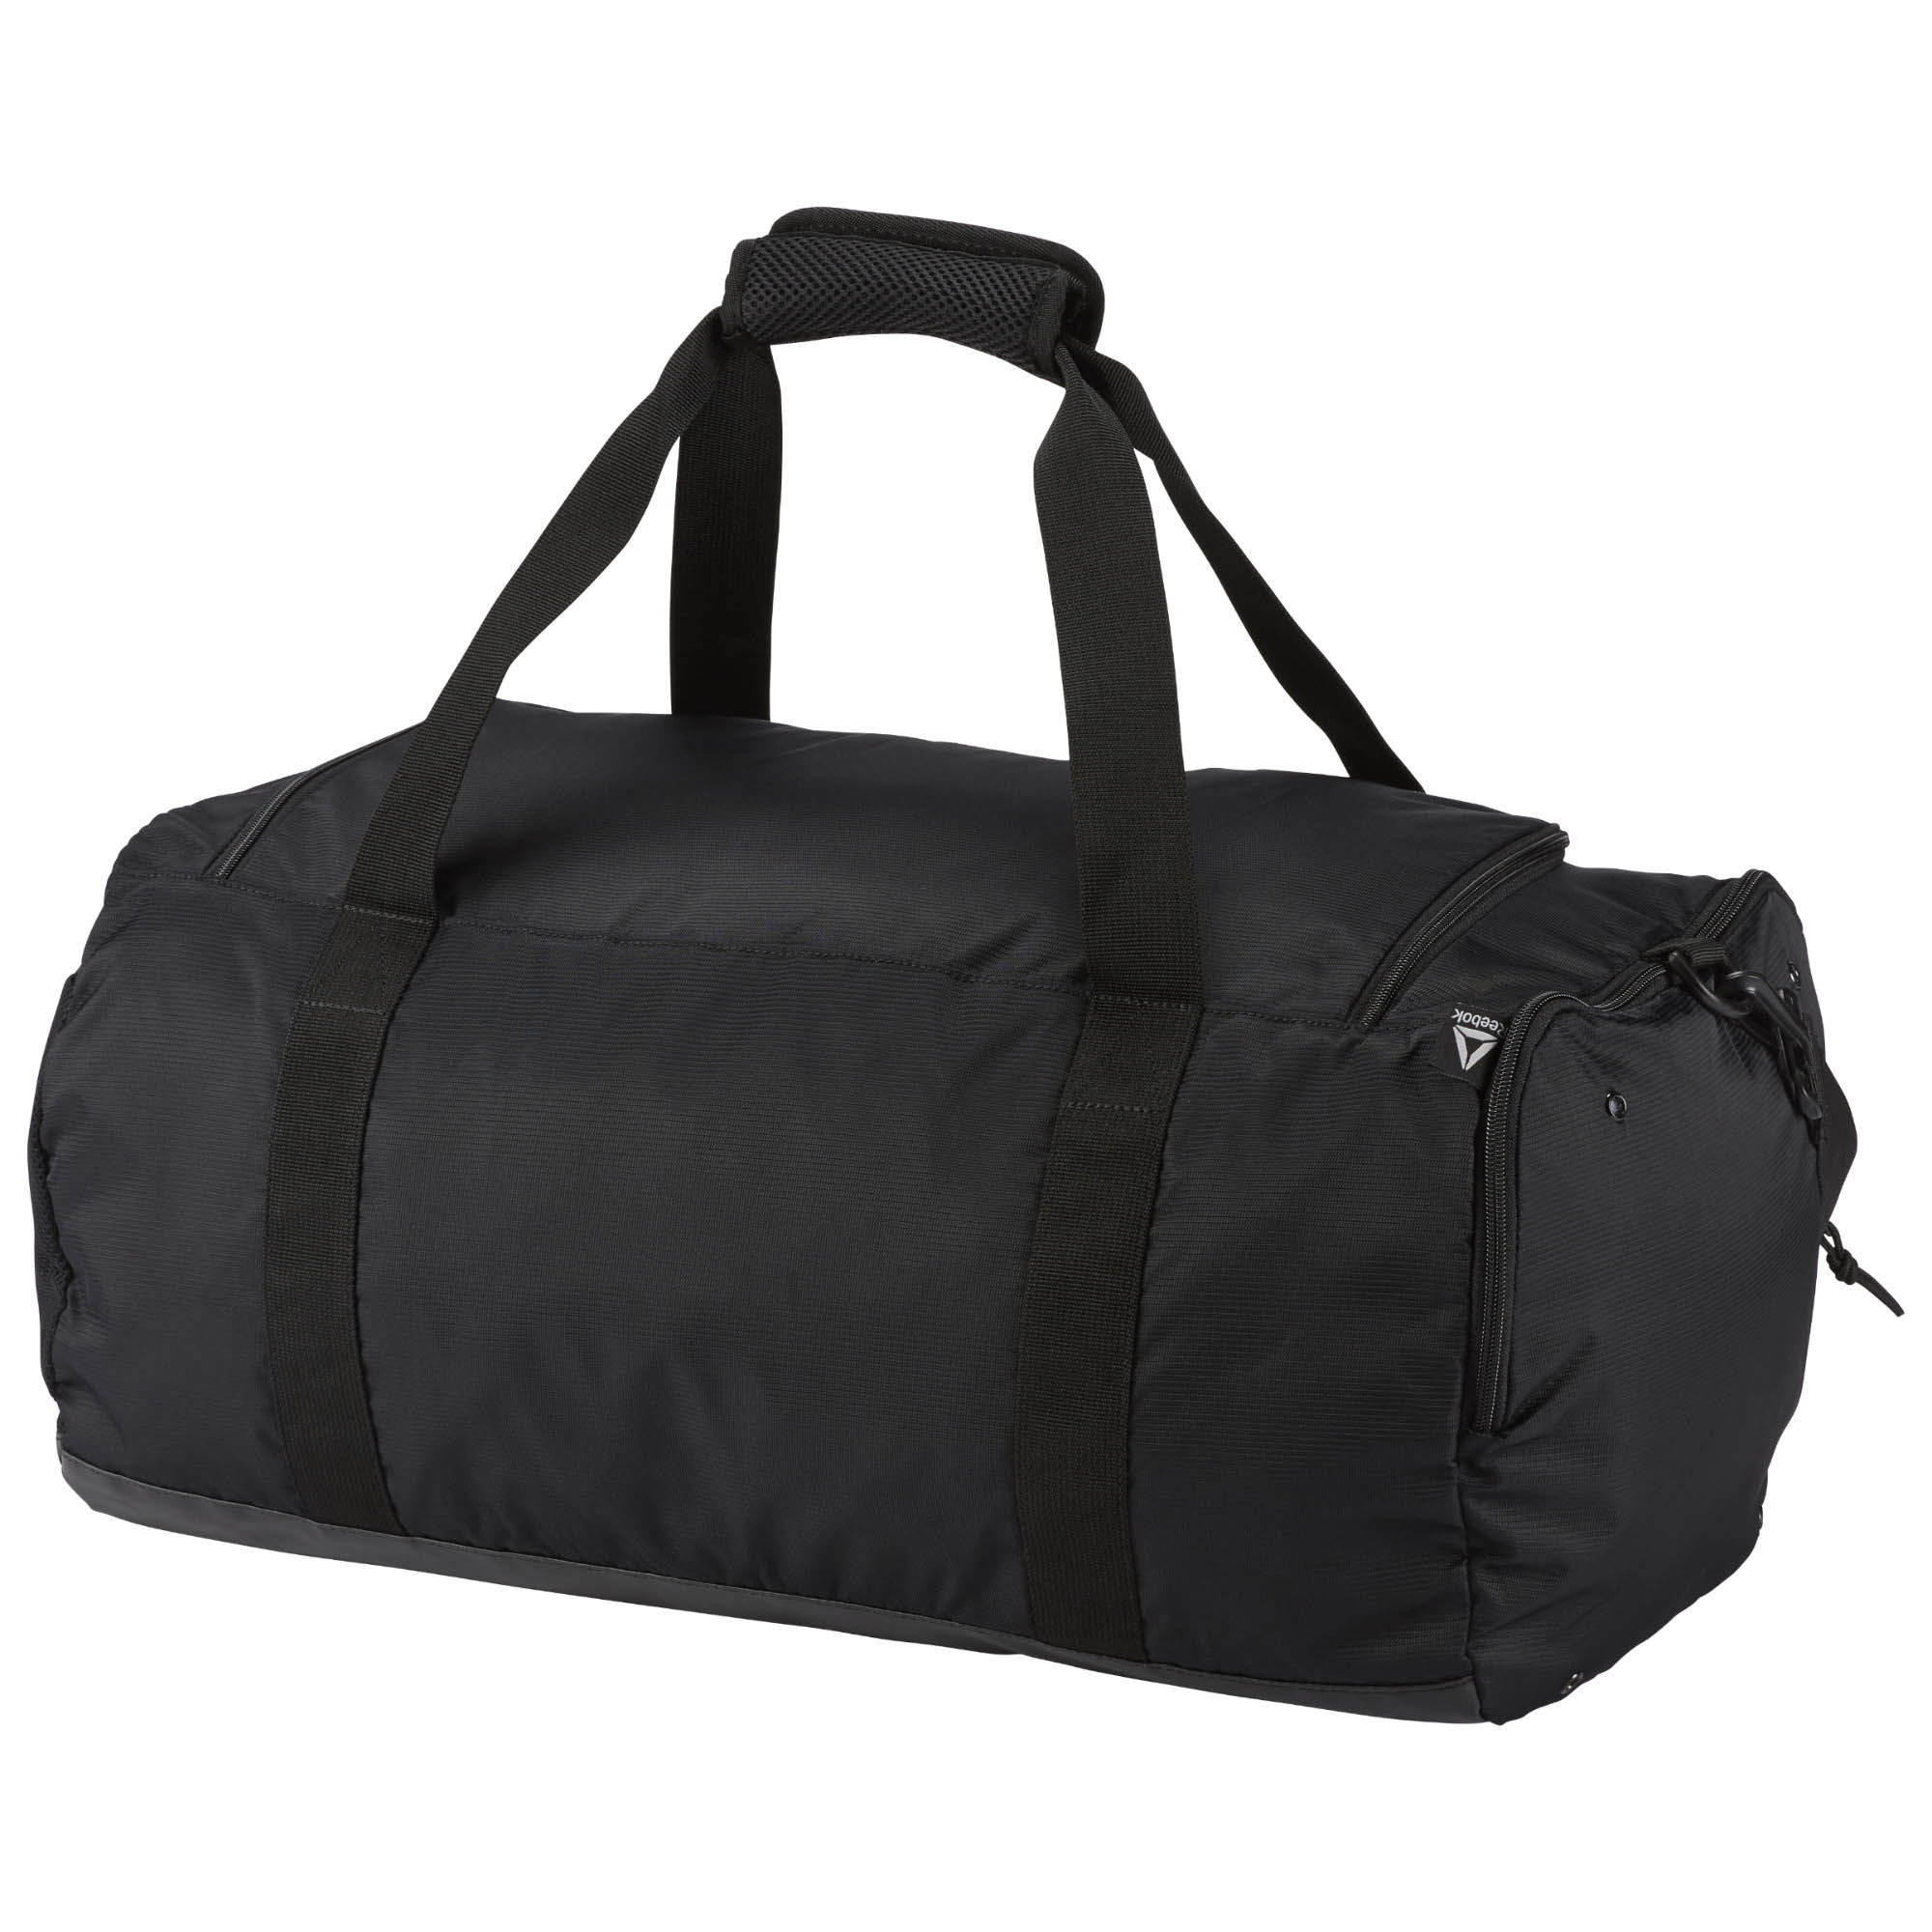 Черная спортивная сумка. Спортивная сумка Reebok Duffle Bag. Сумка спортивная Duffle Bag, черная. Спортивные сумки мужские Reebok. Сумка рибок мужские.